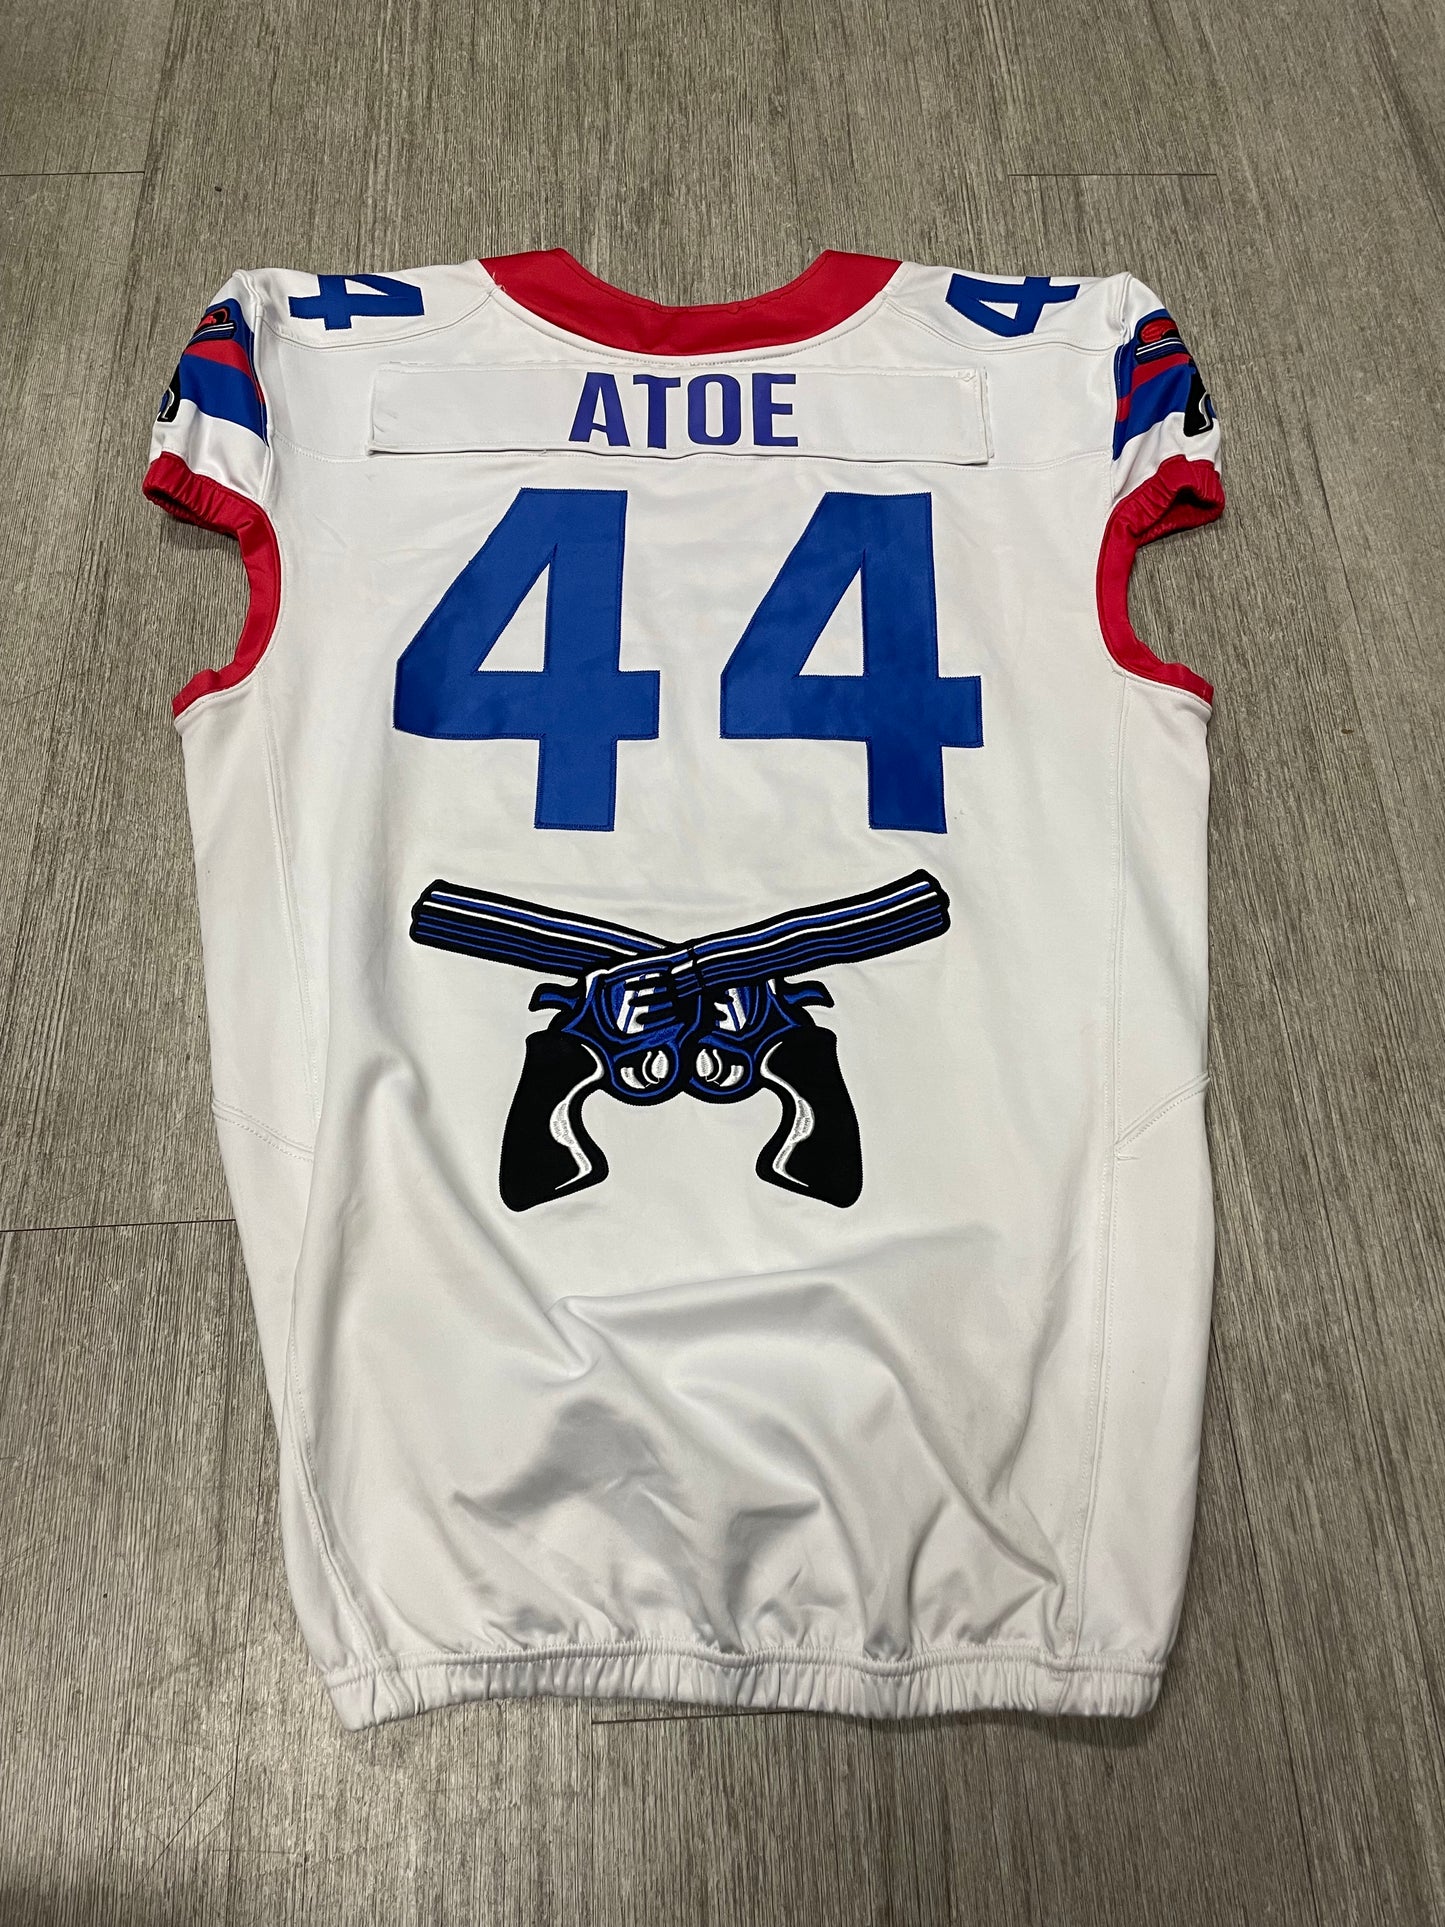 #44 James Atoe - 2023 White Jersey